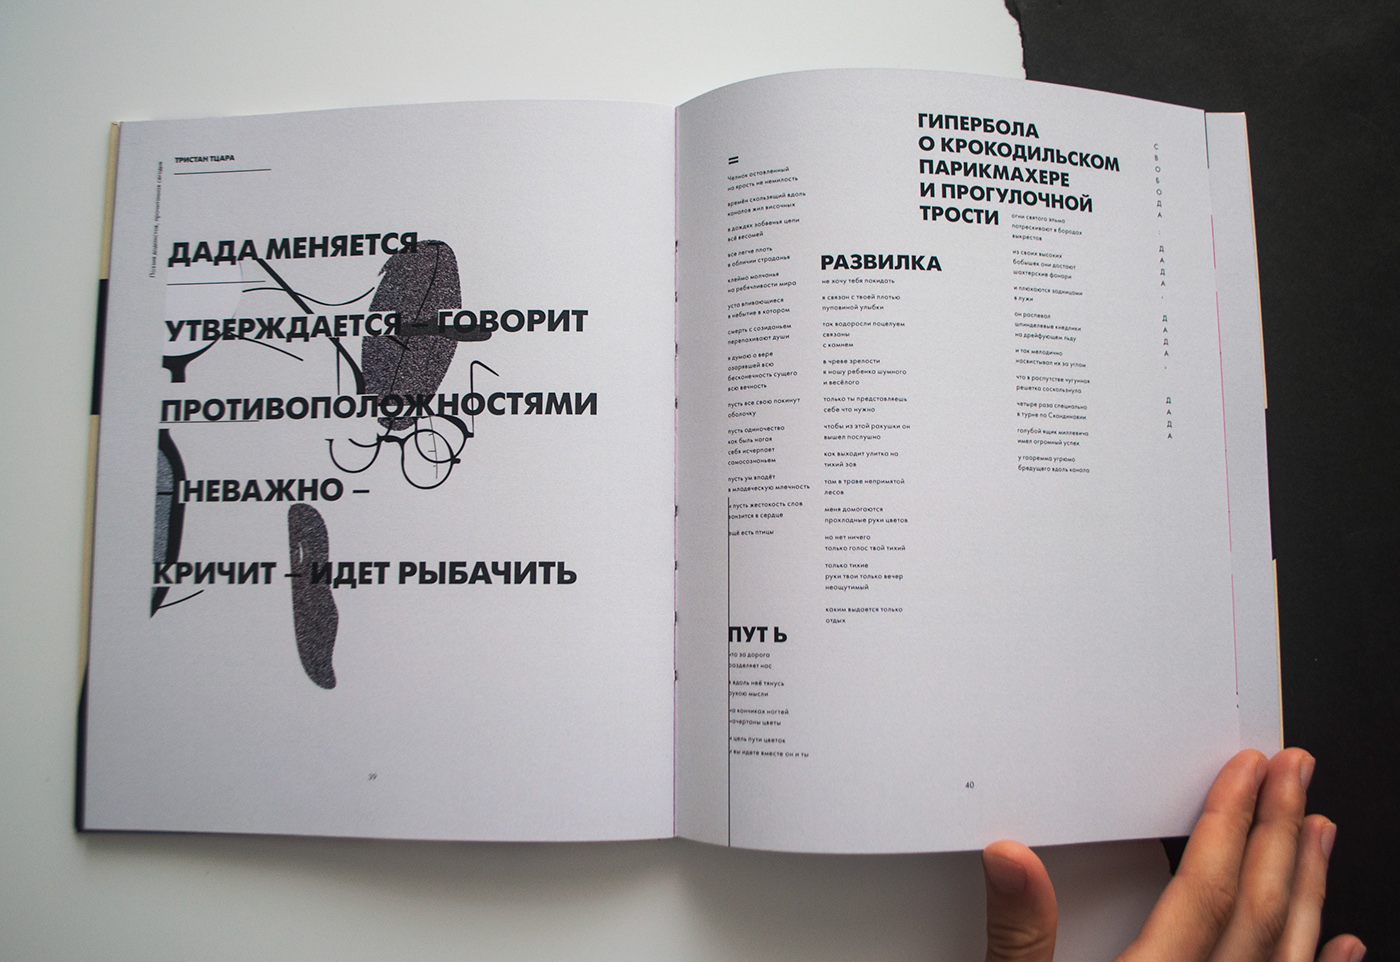 typography   book ILLUSTRATION  graphic Dada dadaism collage book design dada book augmented reality